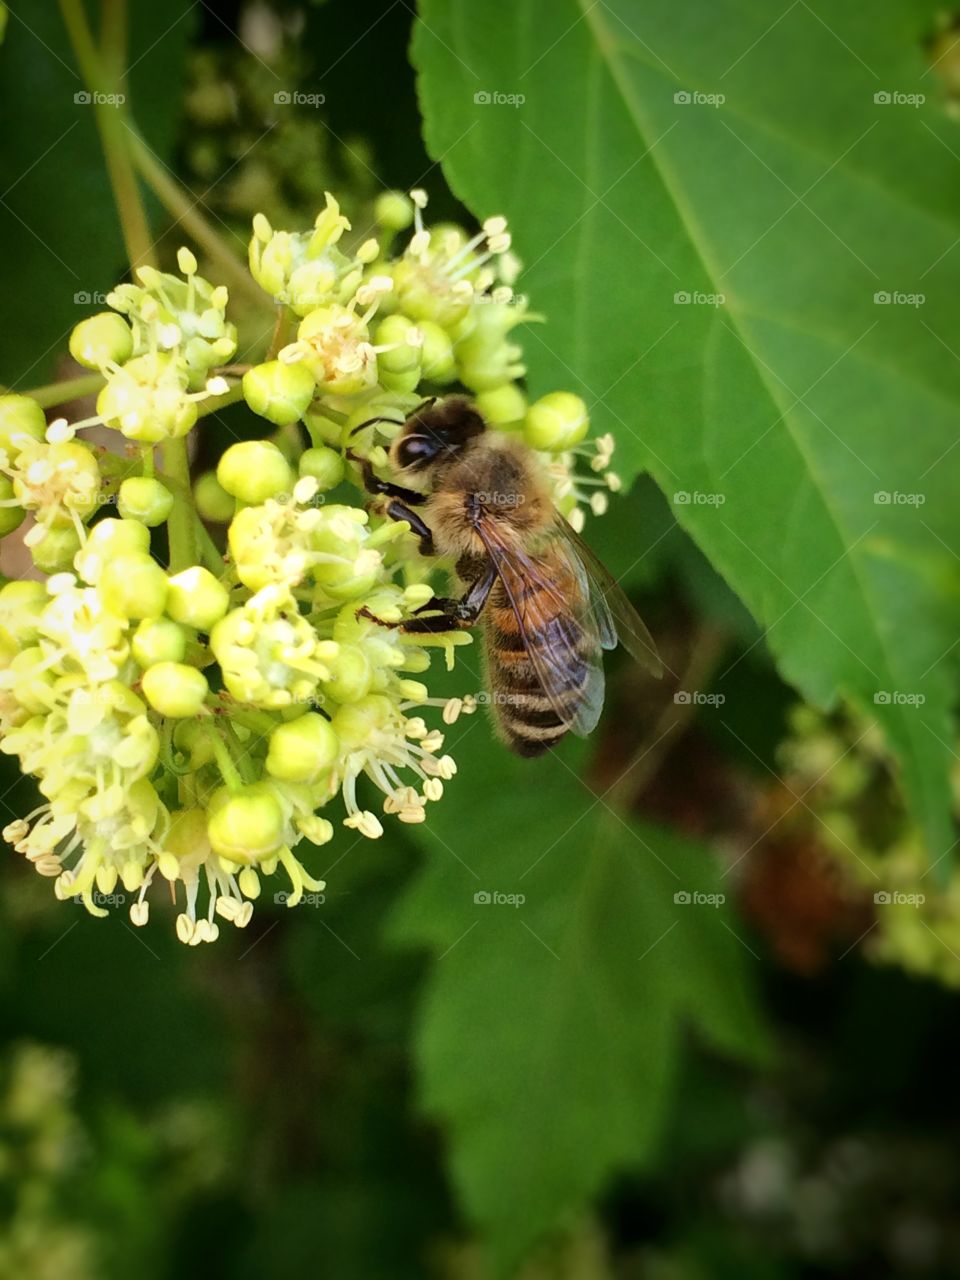 Honey bee on a flower 